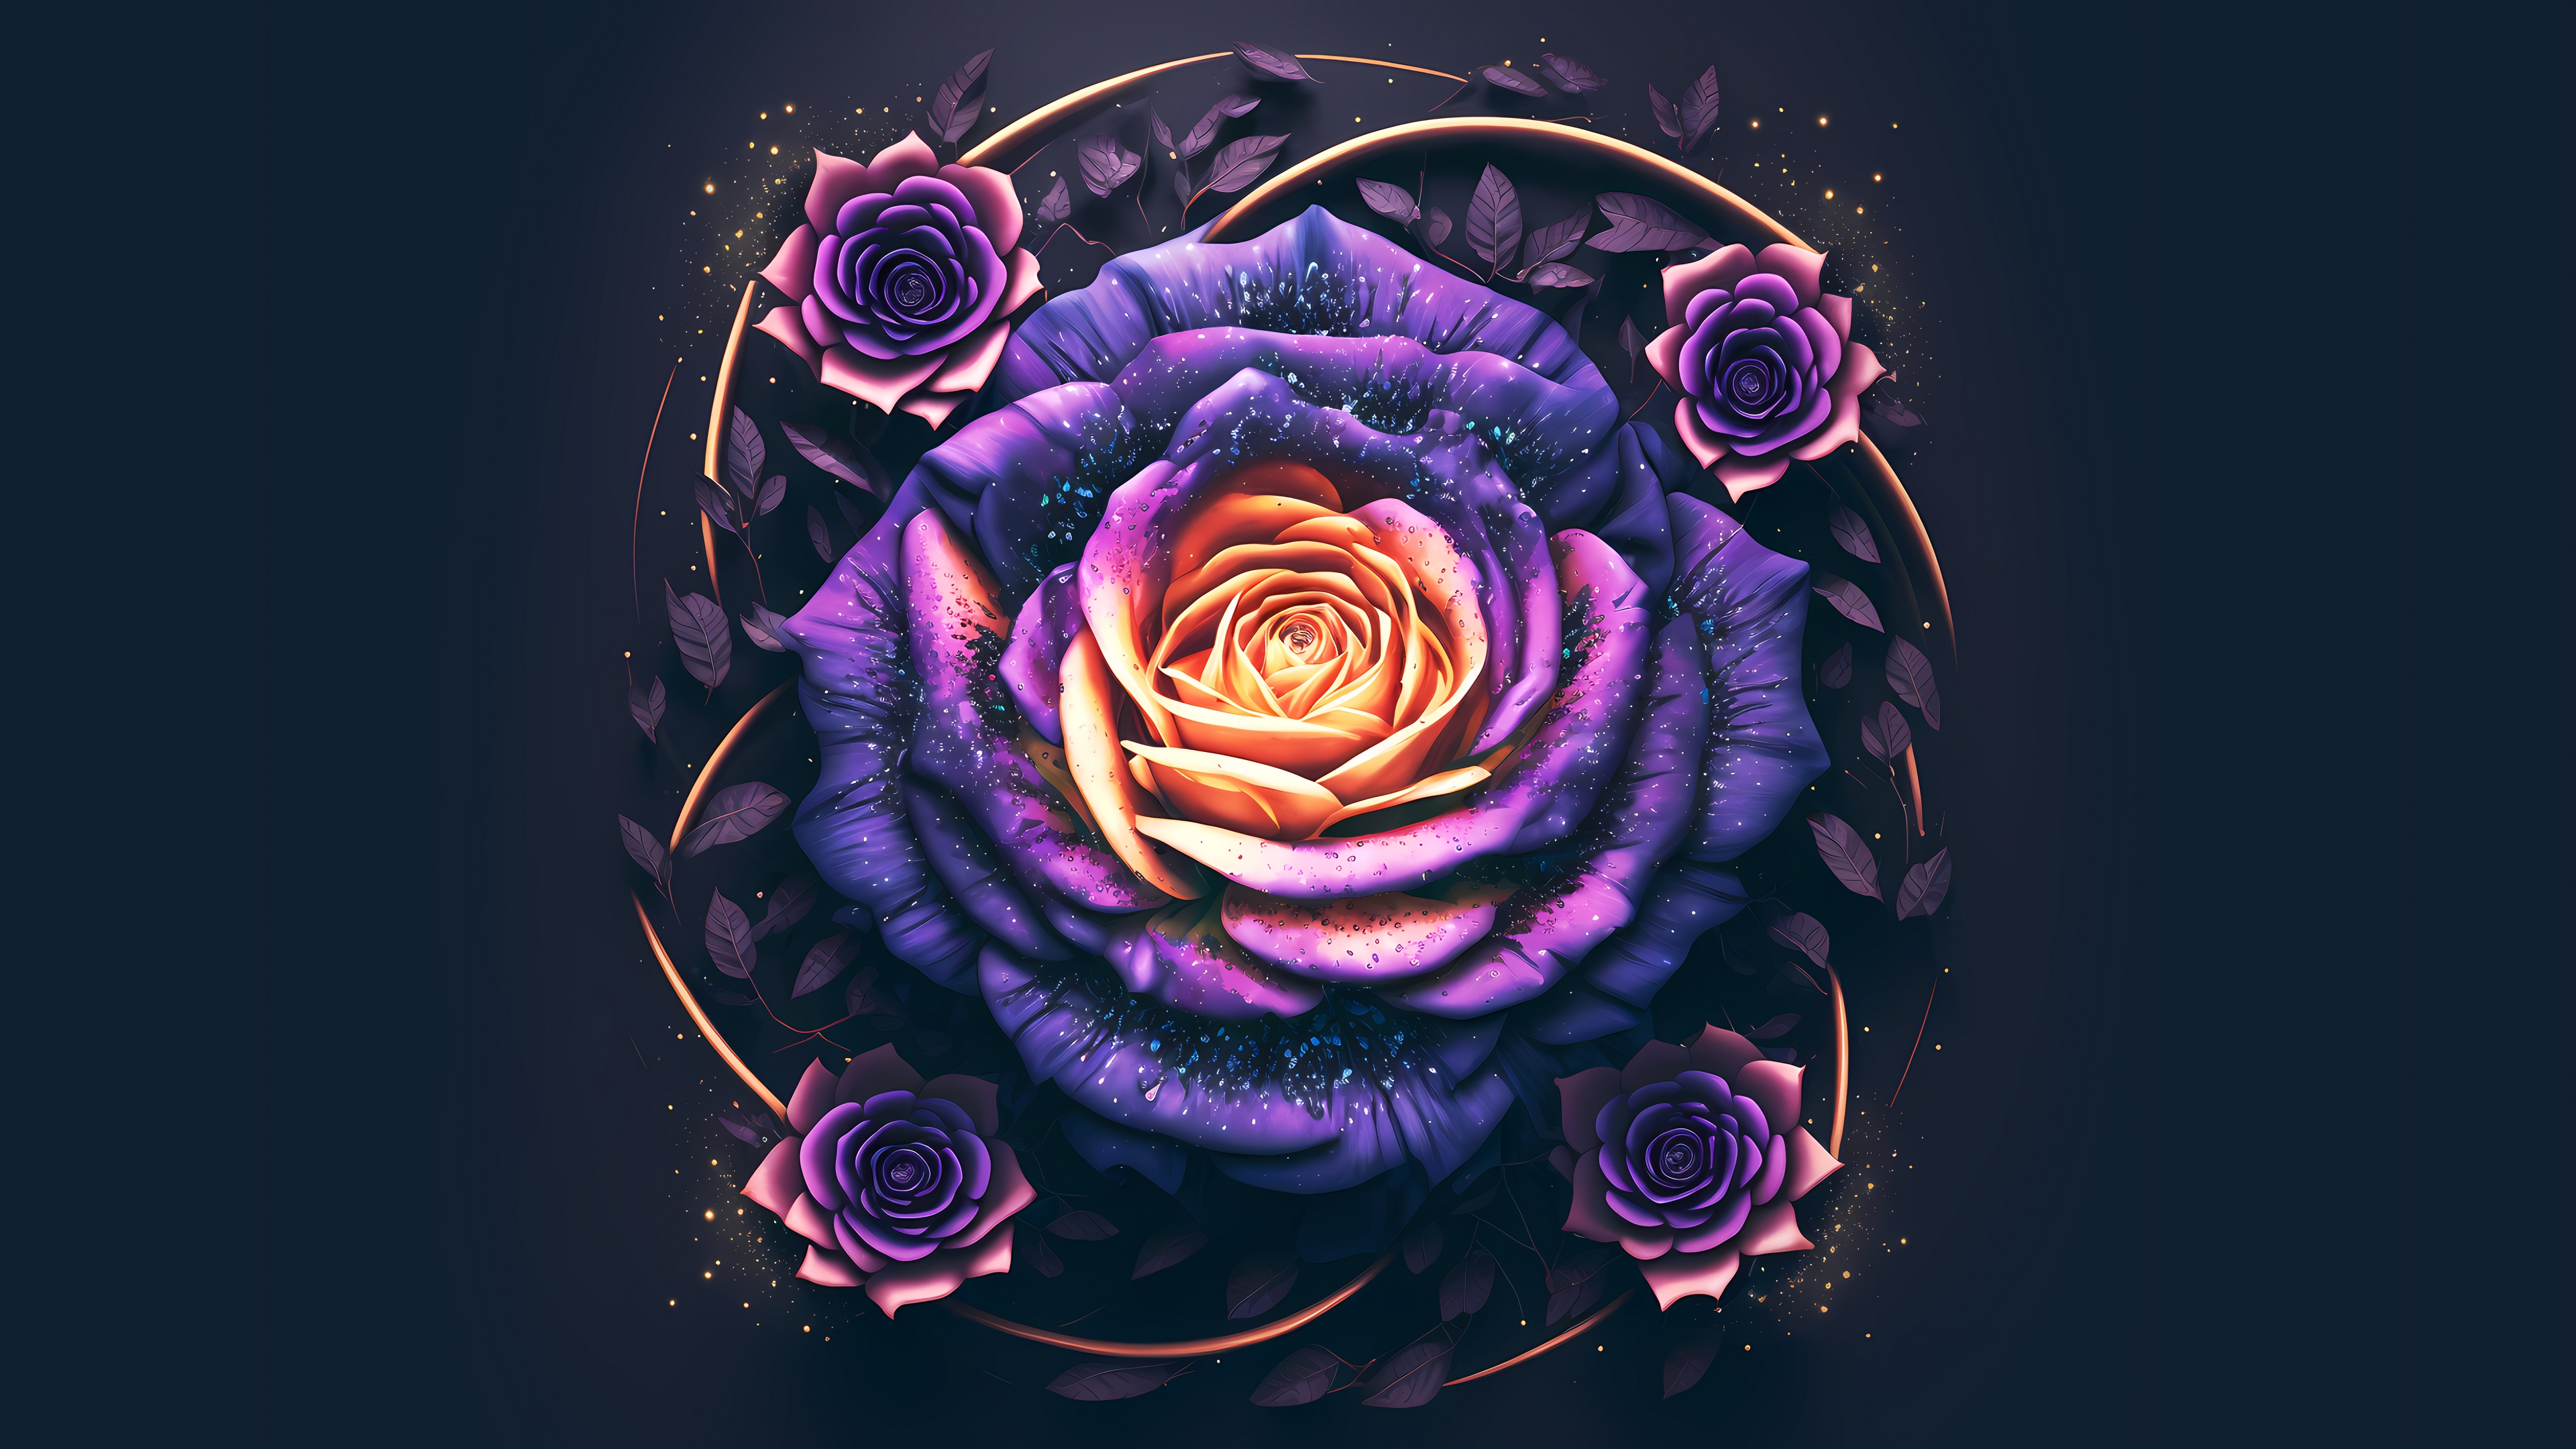 Fantasy rose on a dark background